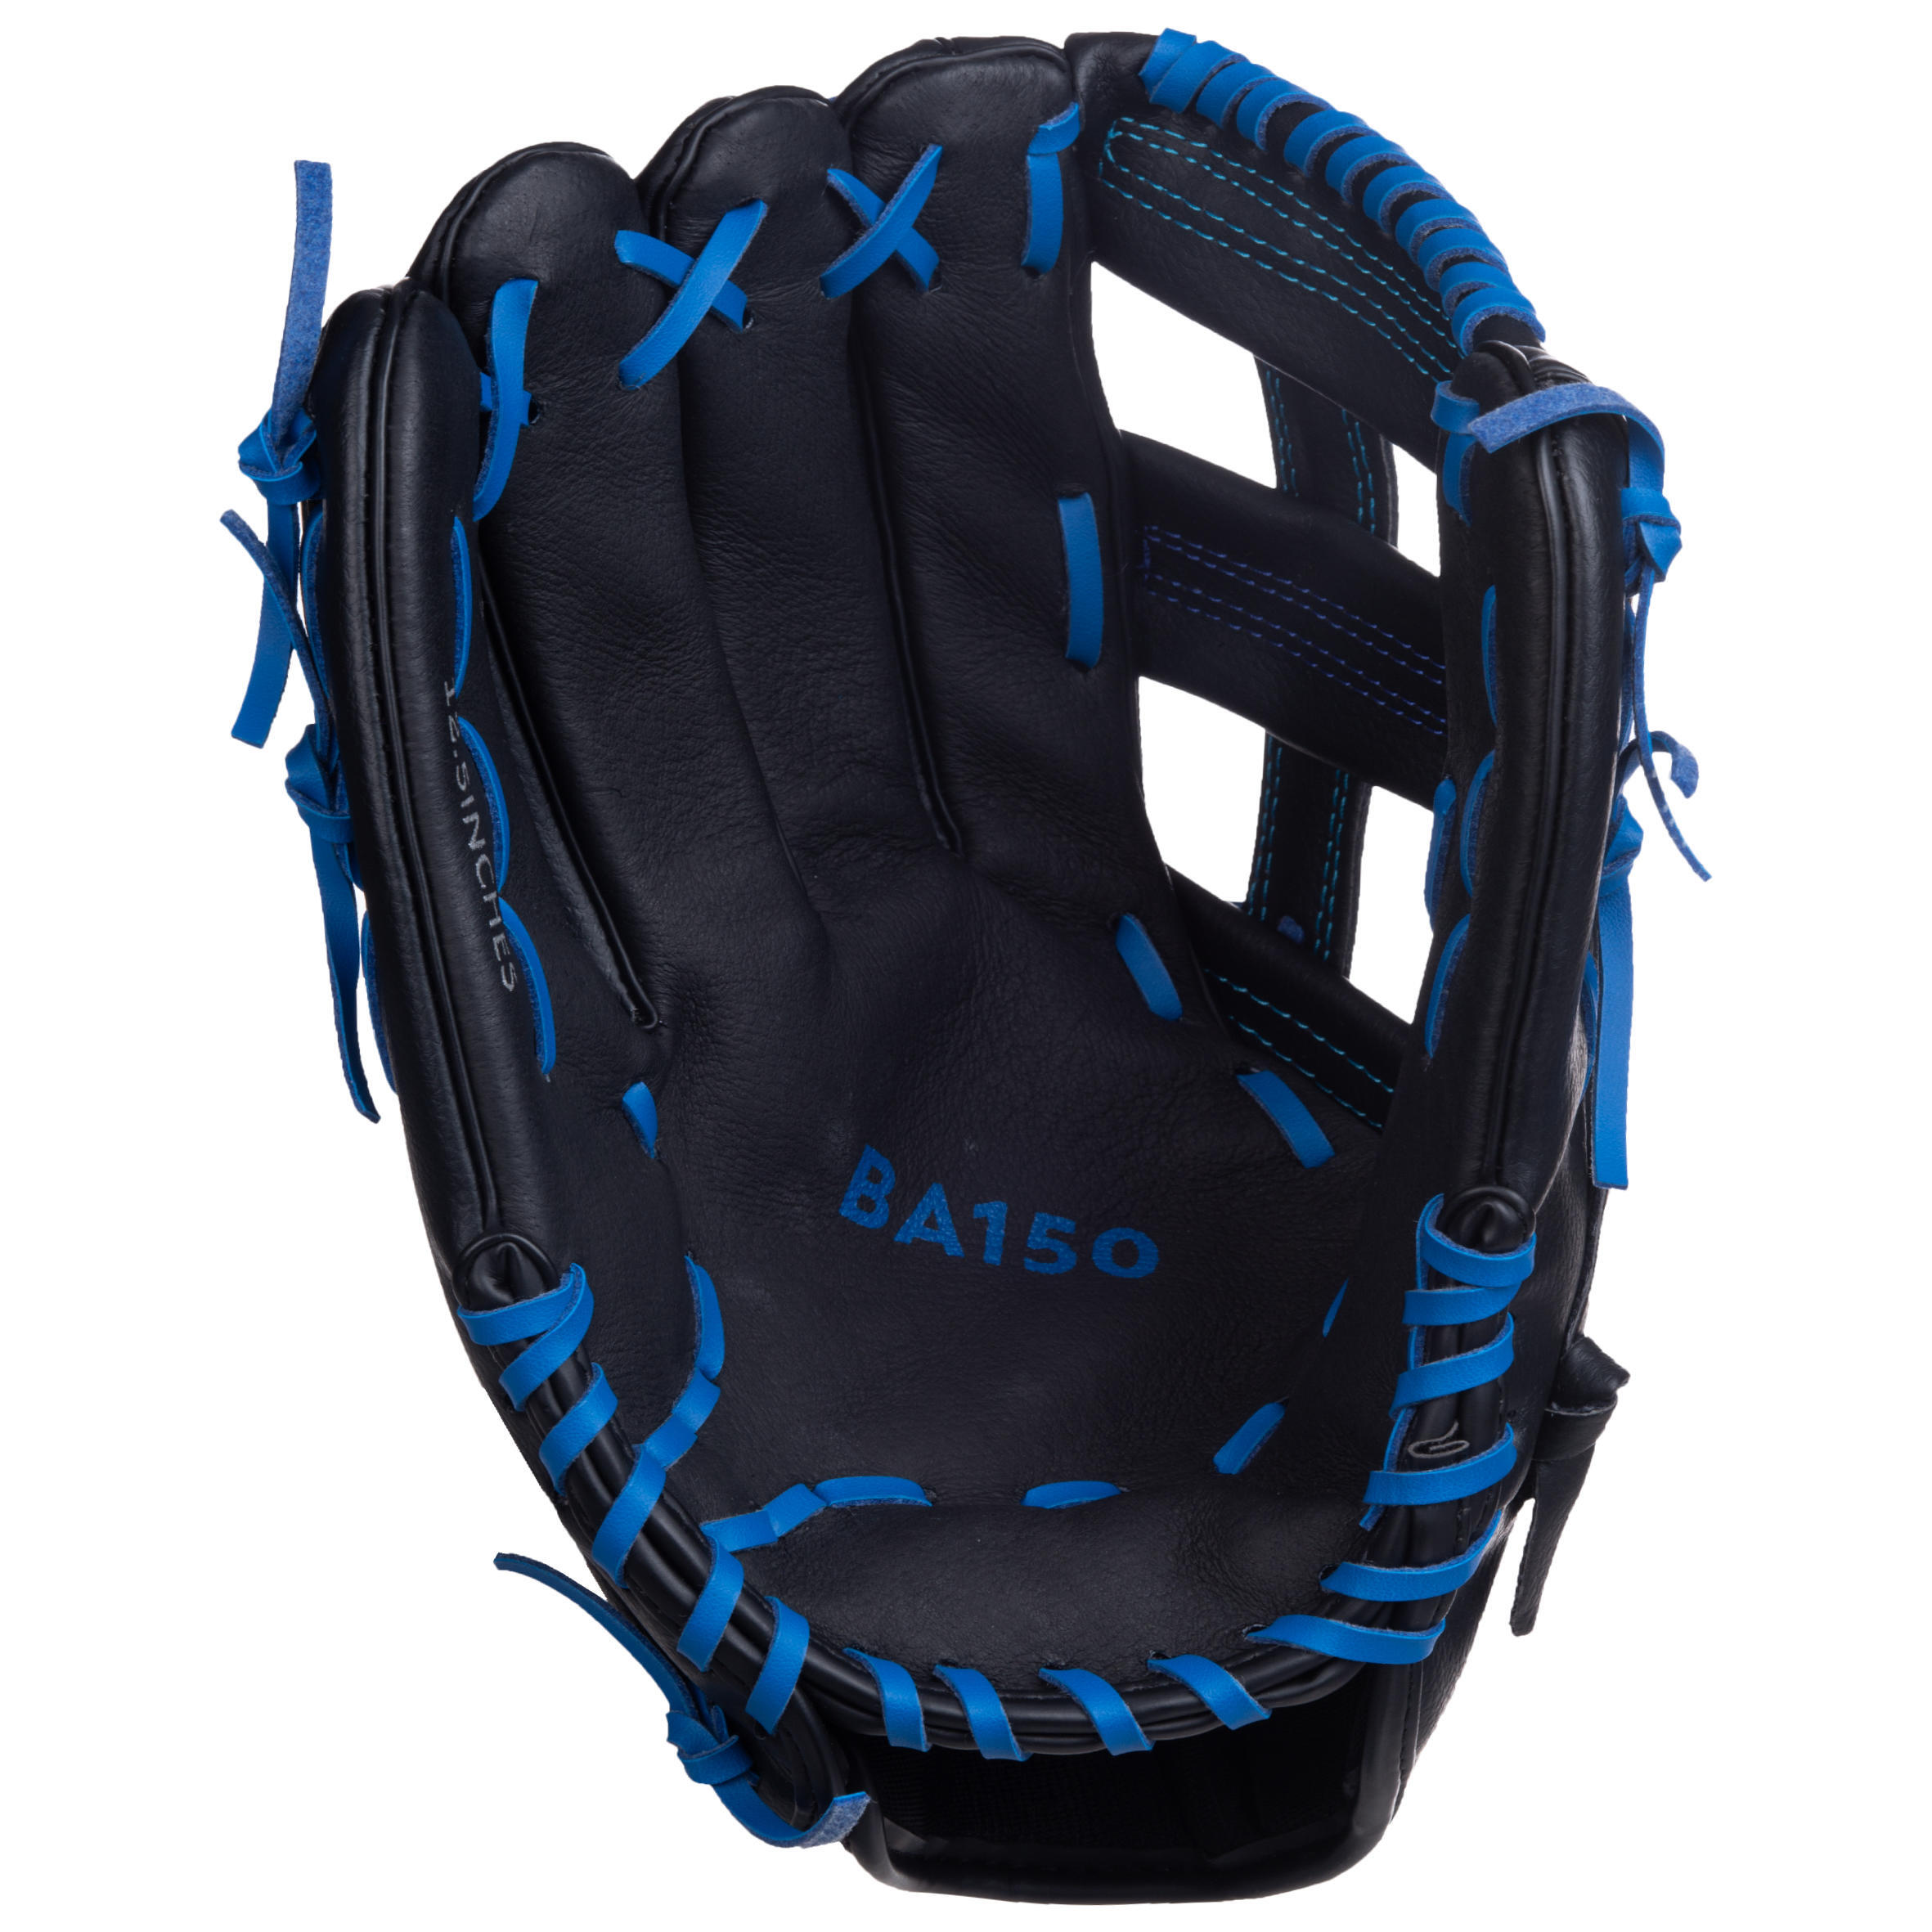 Baseball glove left-hand throw Adult - BA150 blue 4/8